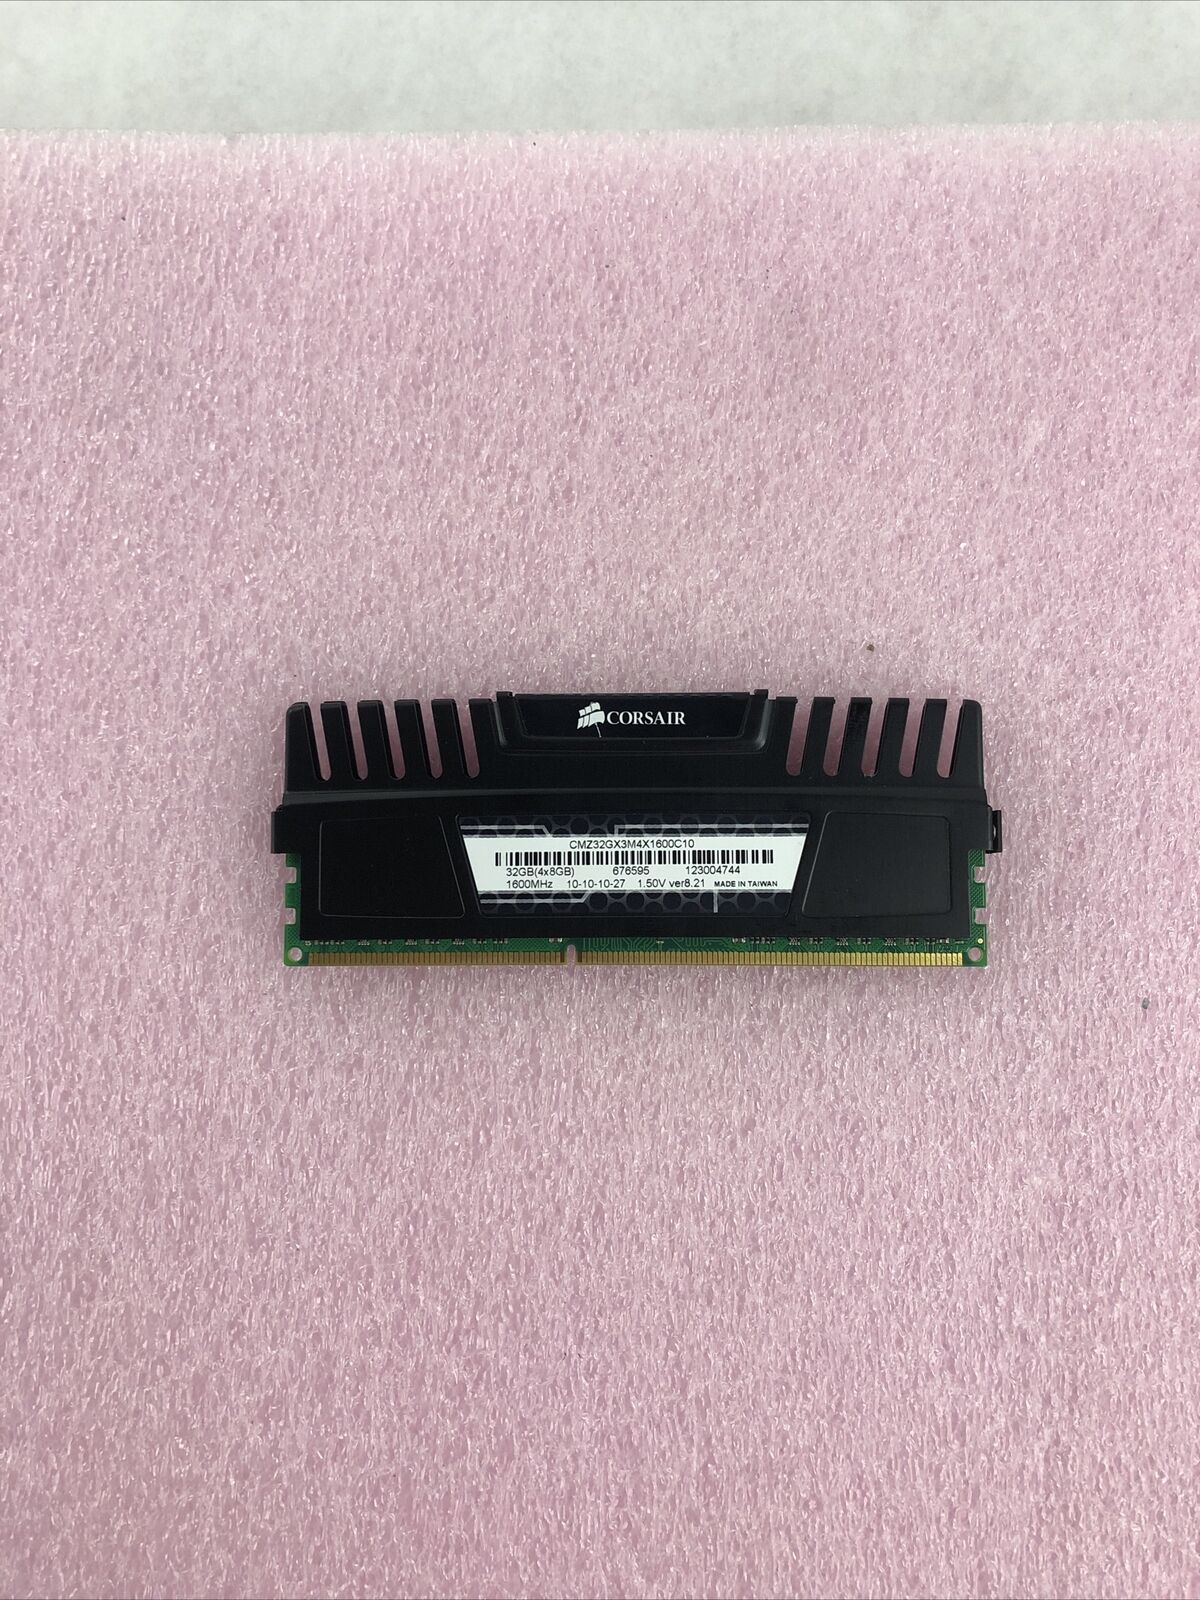 Corsair Vengeance DDR3 Lot of 7 8GB RAM Sticks CMZ32GX3M4X1600C10